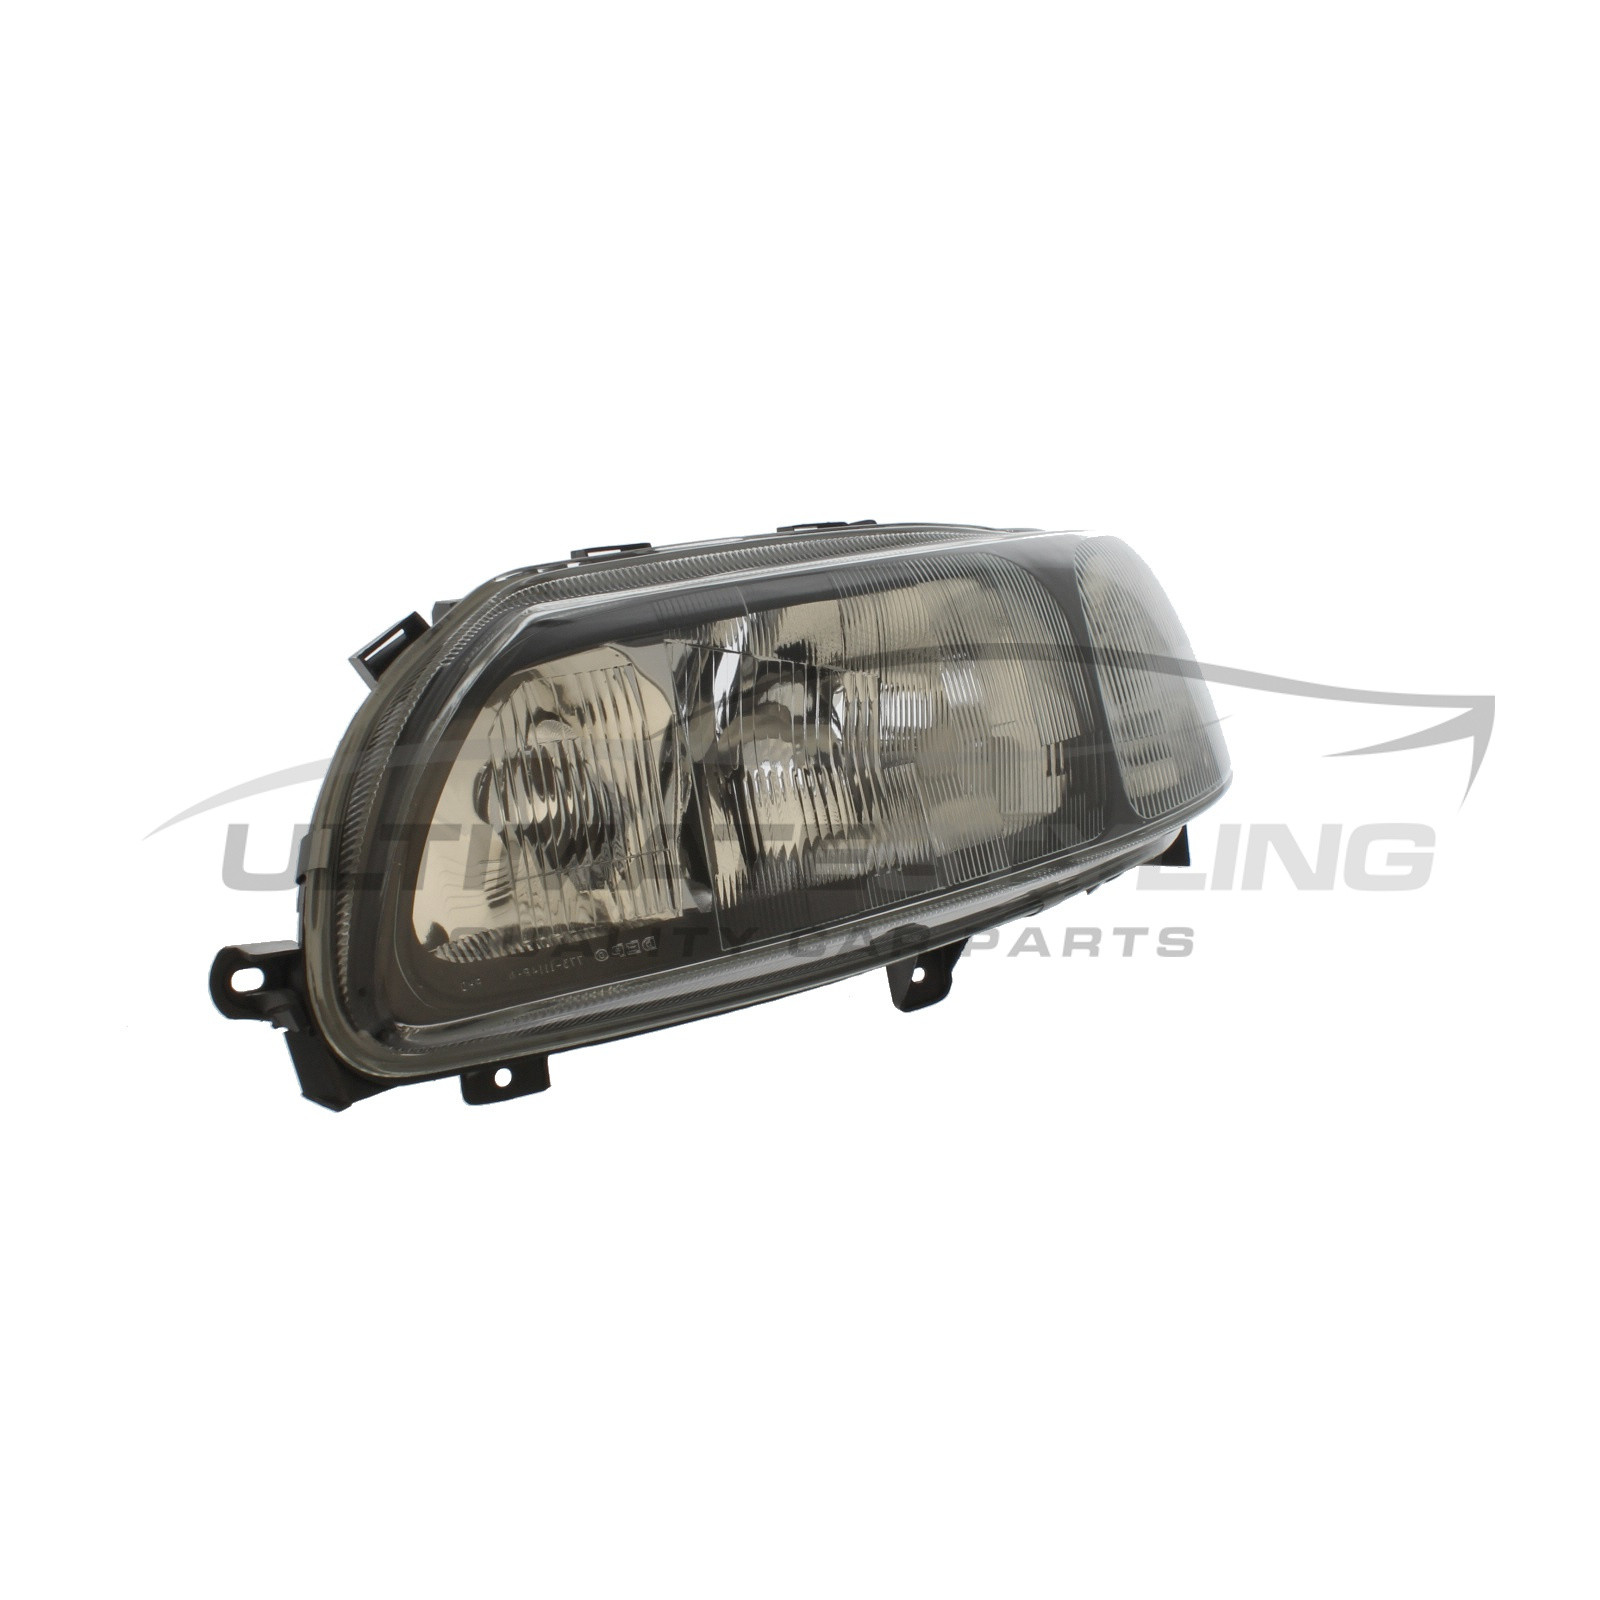 Volvo V70 / XC70 Headlight / Headlamp - Passenger Side (LH) - Halogen